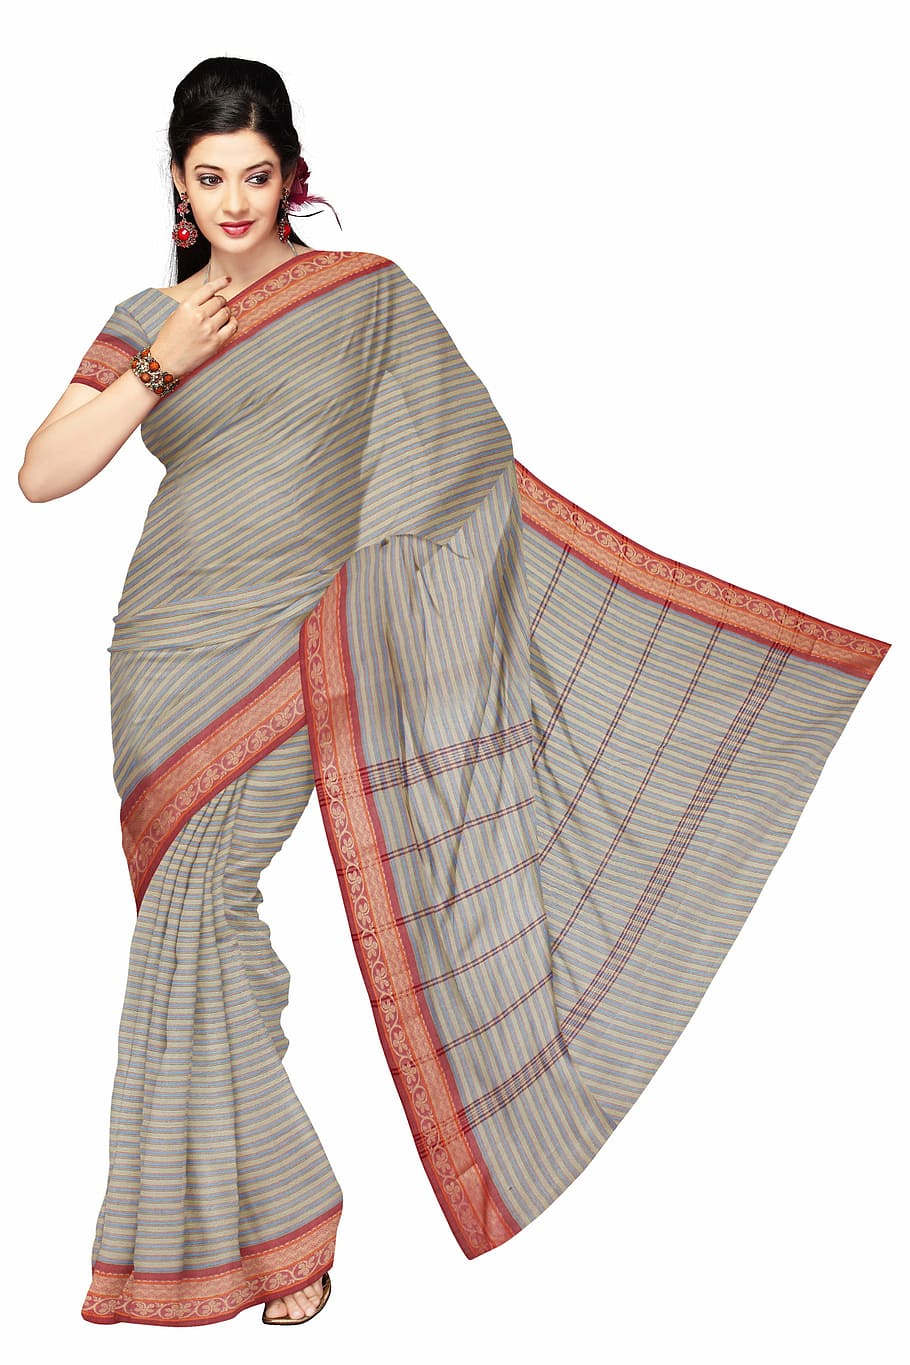 women, gray, red, floral, dress, scarf, sari, indian clothing, fashion, silk